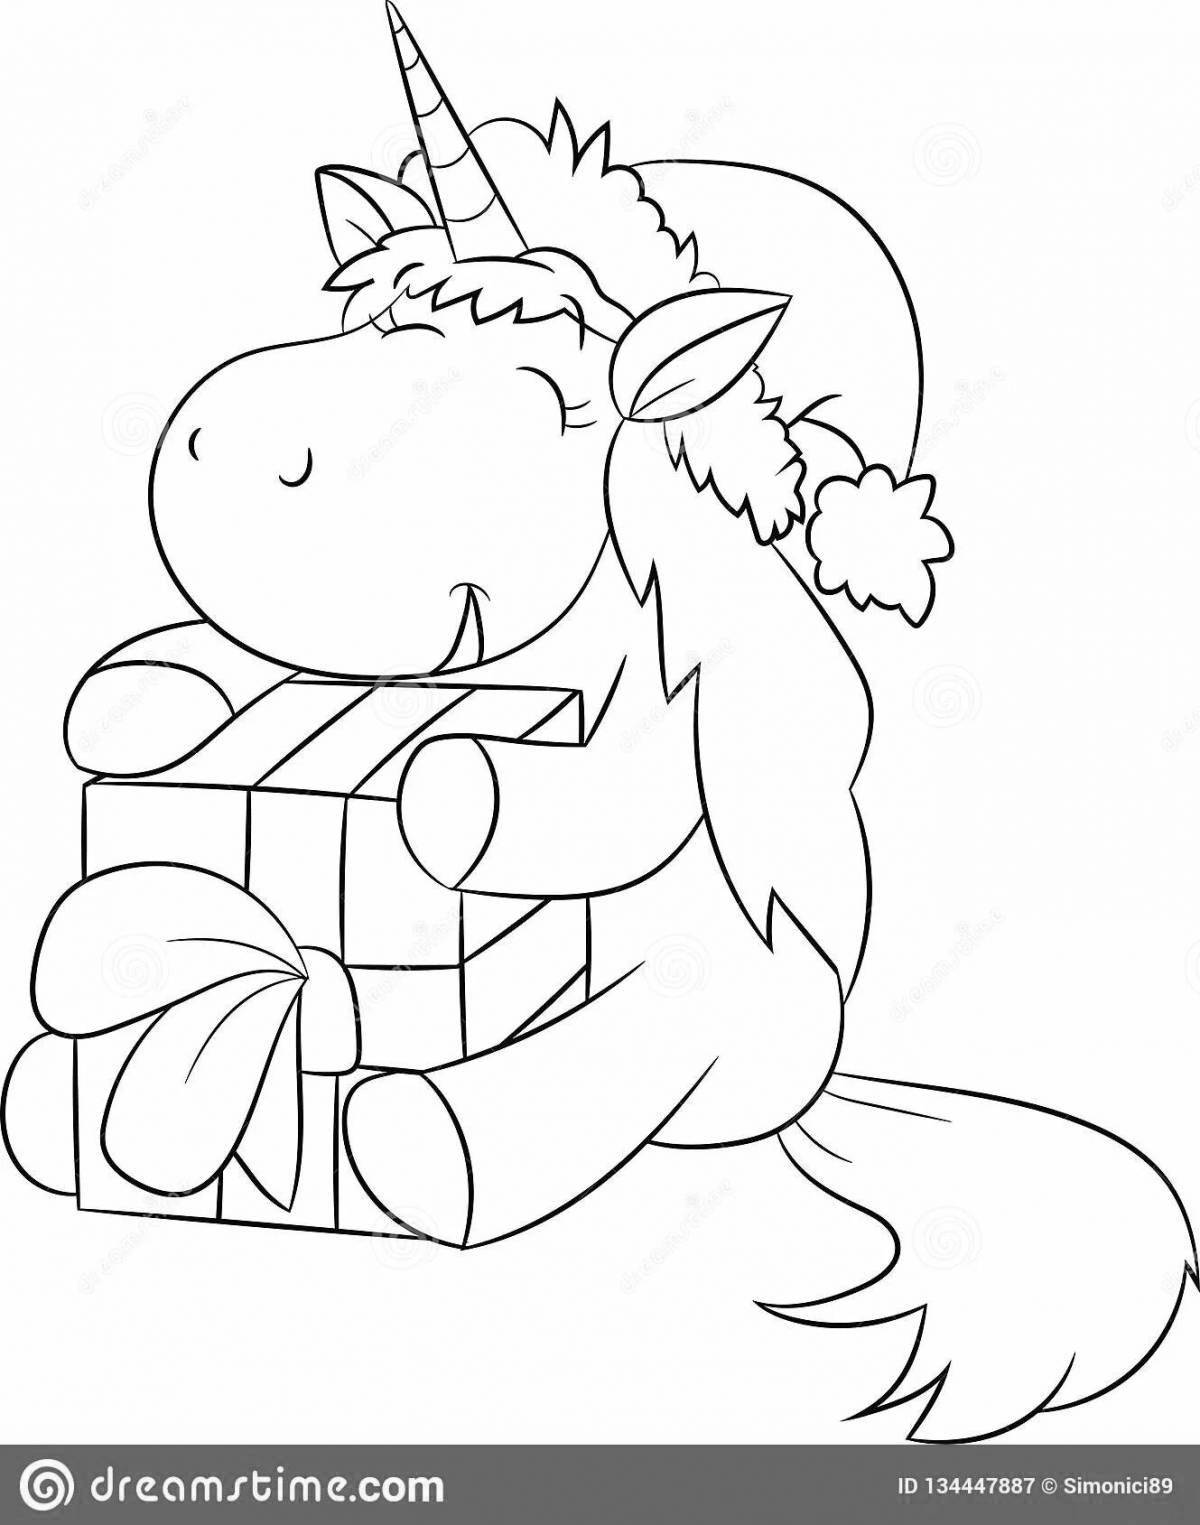 Exquisite Christmas unicorn coloring book